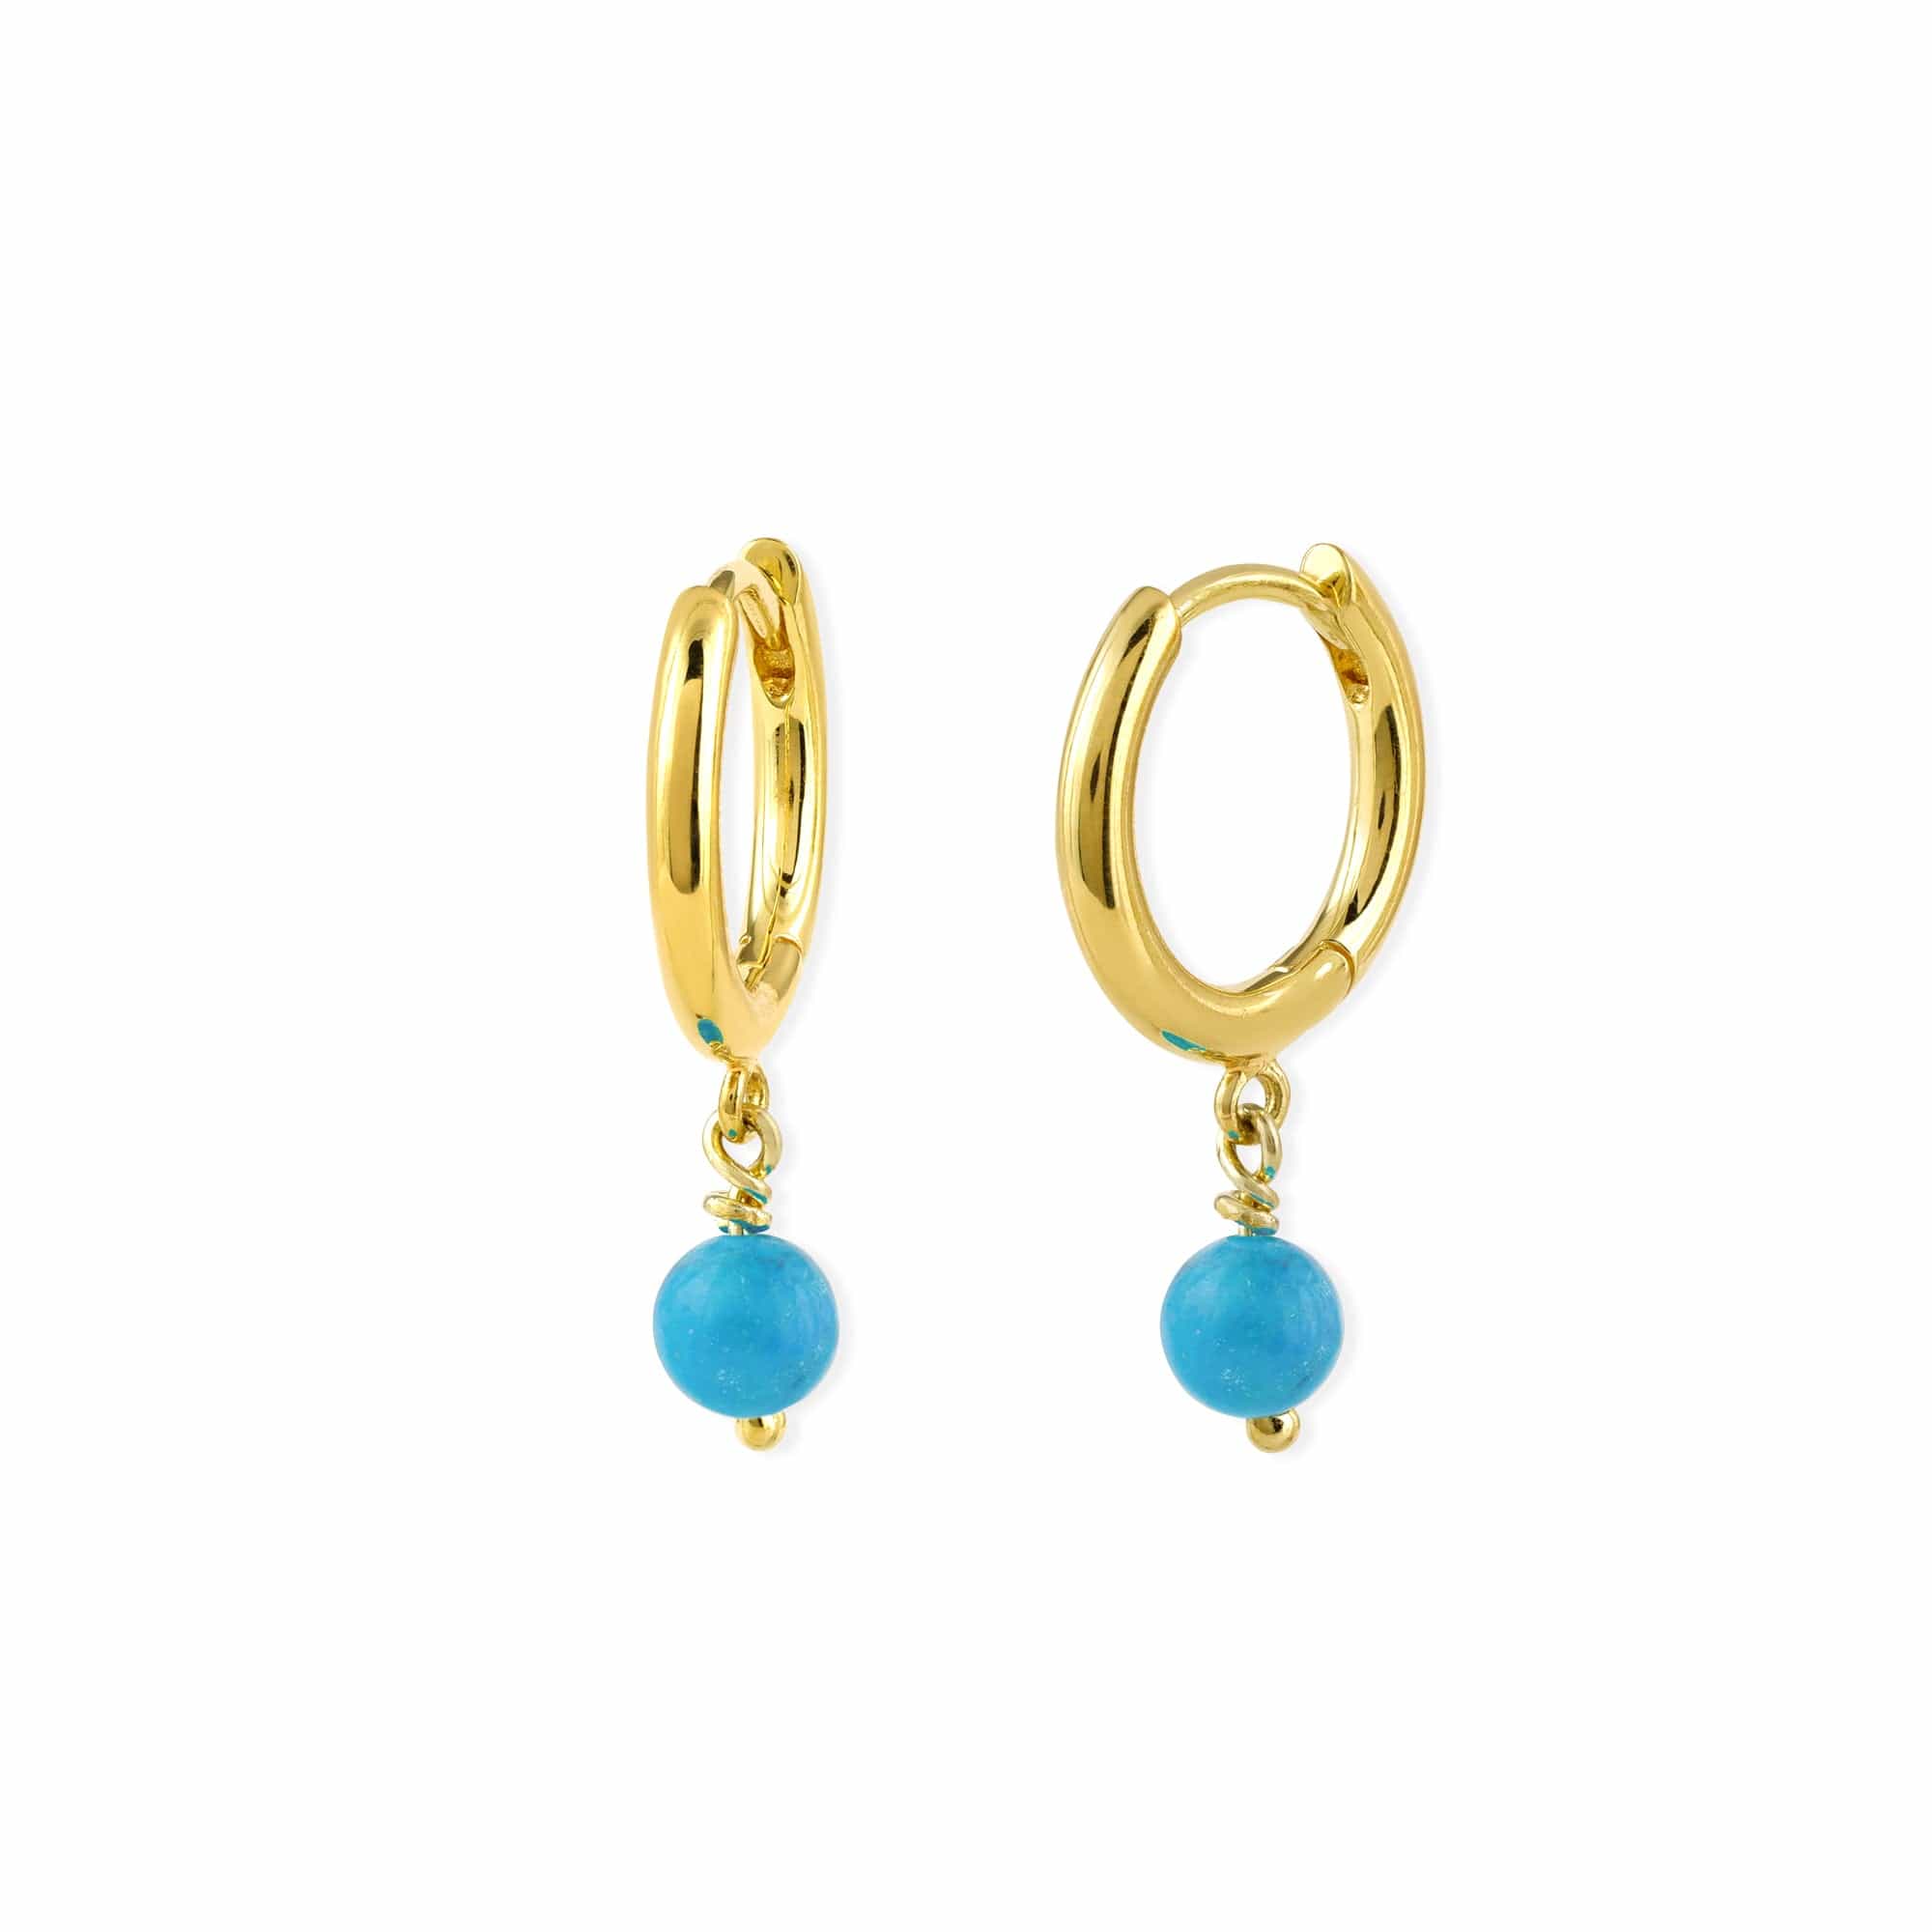 Boma Jewelry Earrings Turquoise / 14K Gold Plated Treasured Drop Huggies